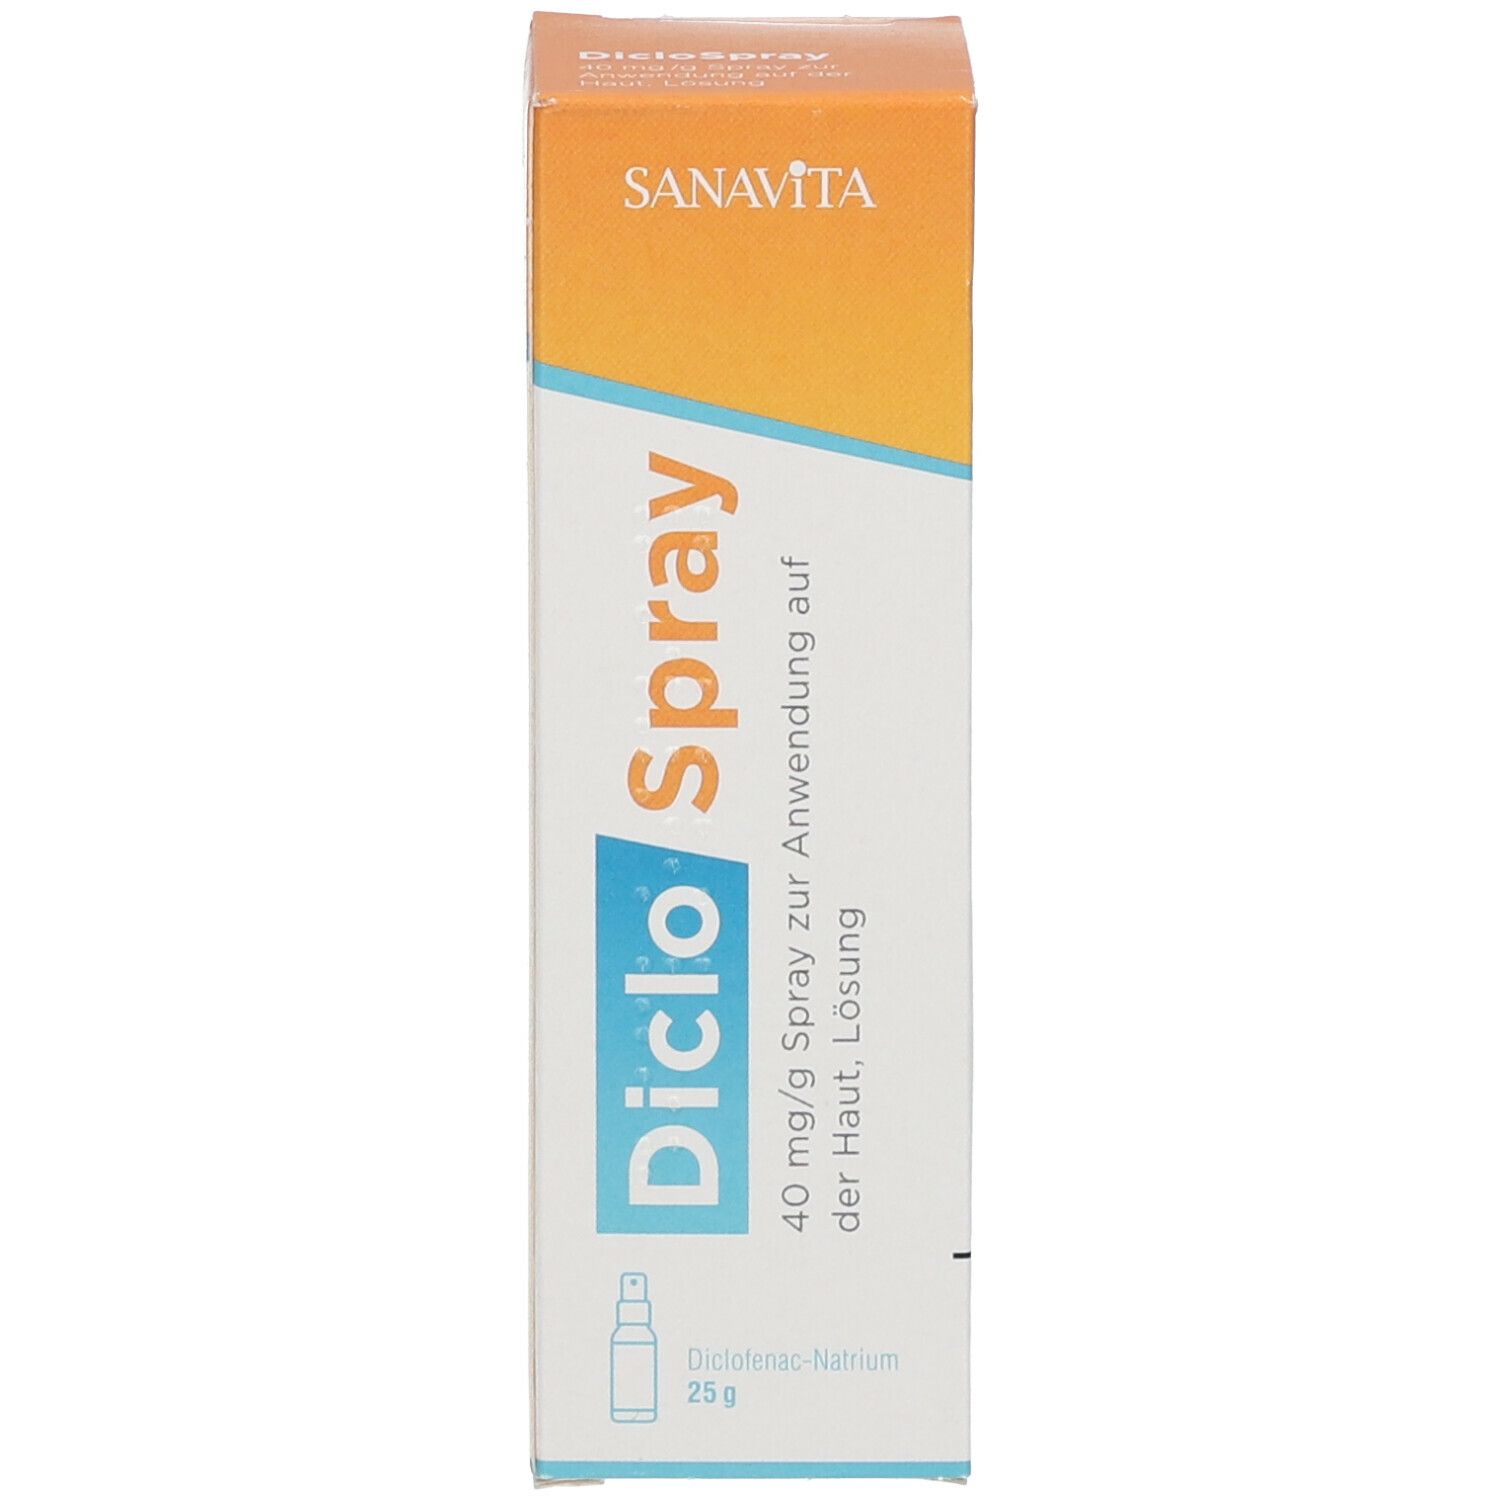 SANAVITA DicloSpray 40 mg/g Spray